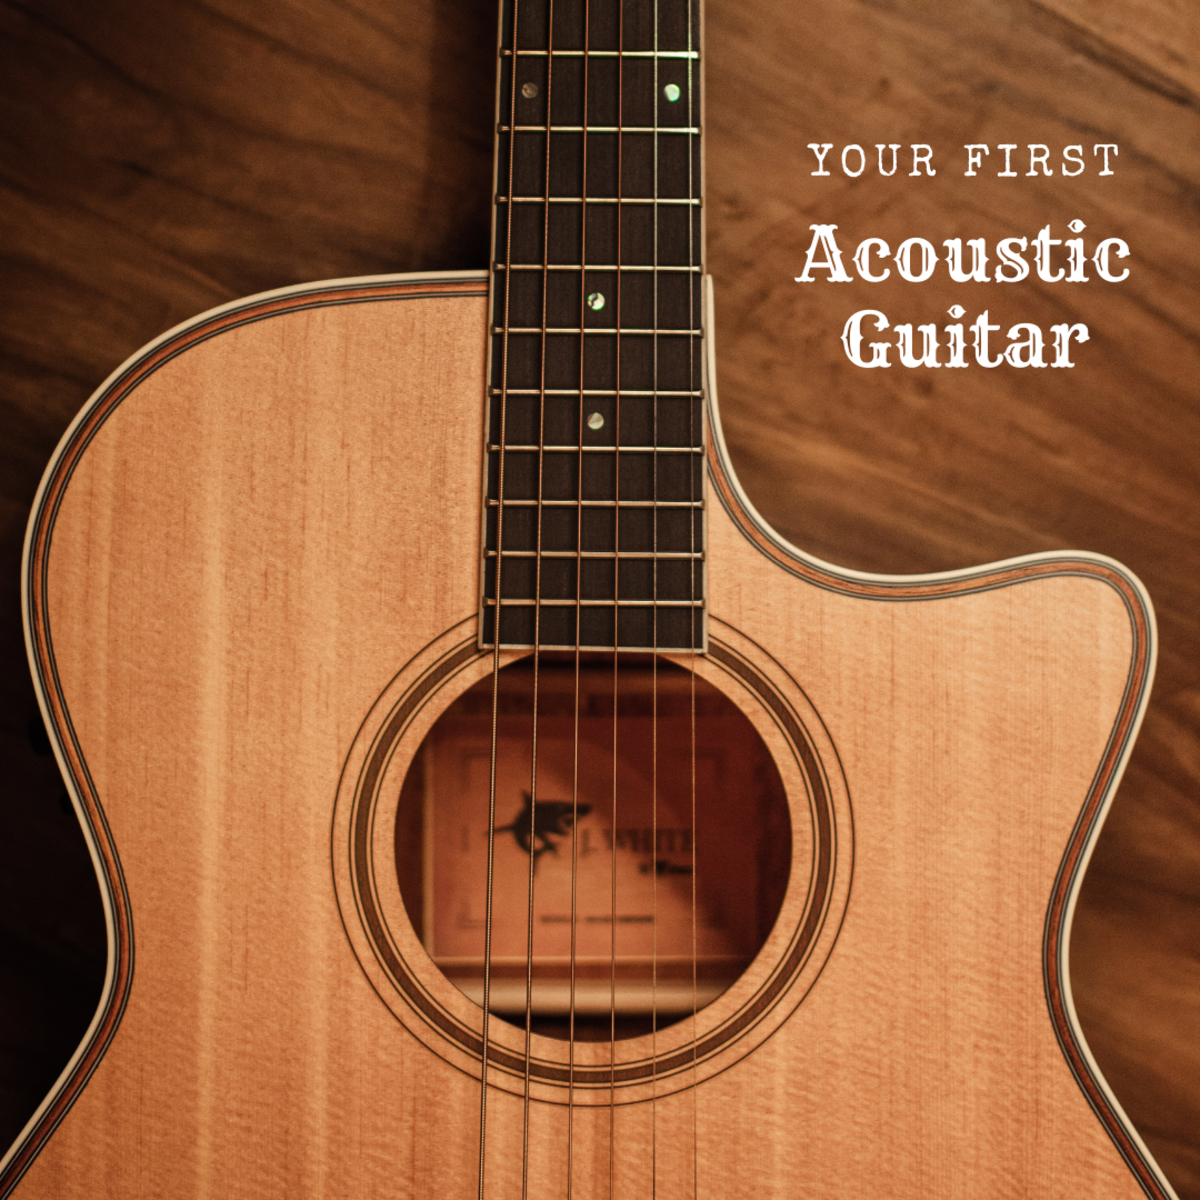 Advice on choosing an acoustic guitar for a beginner